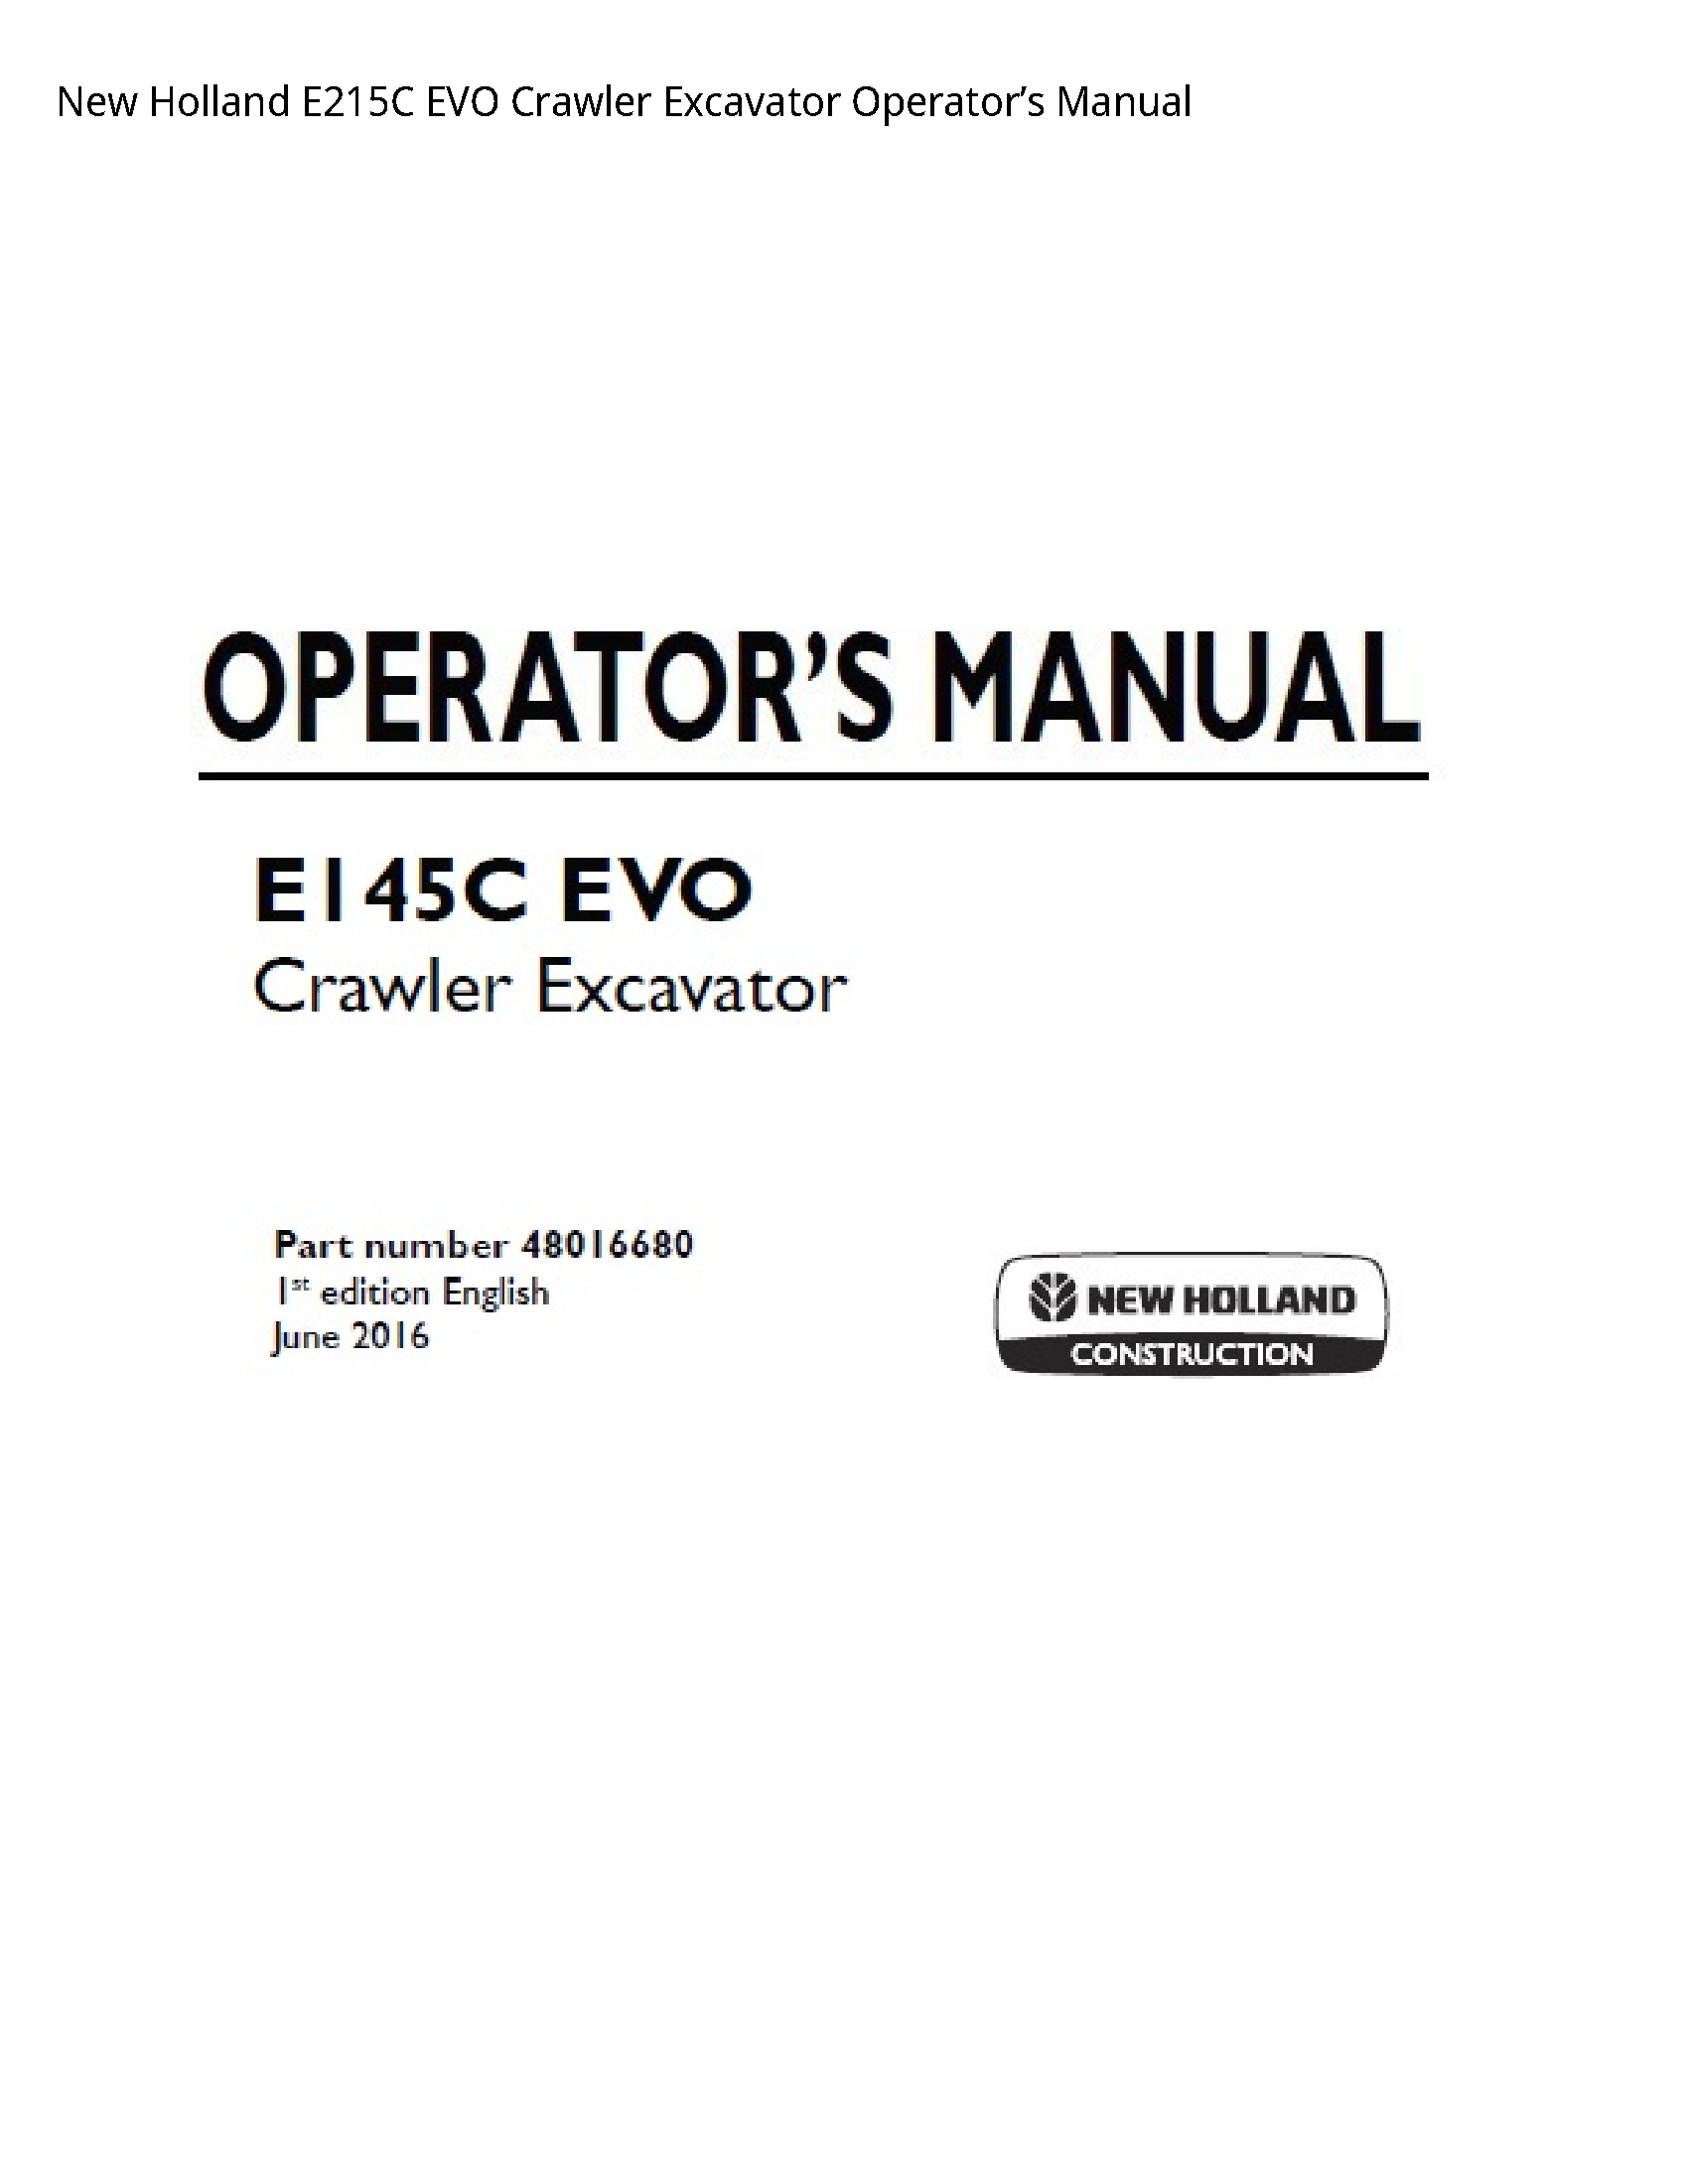 New Holland E215C EVO Crawler Excavator Operator’s manual